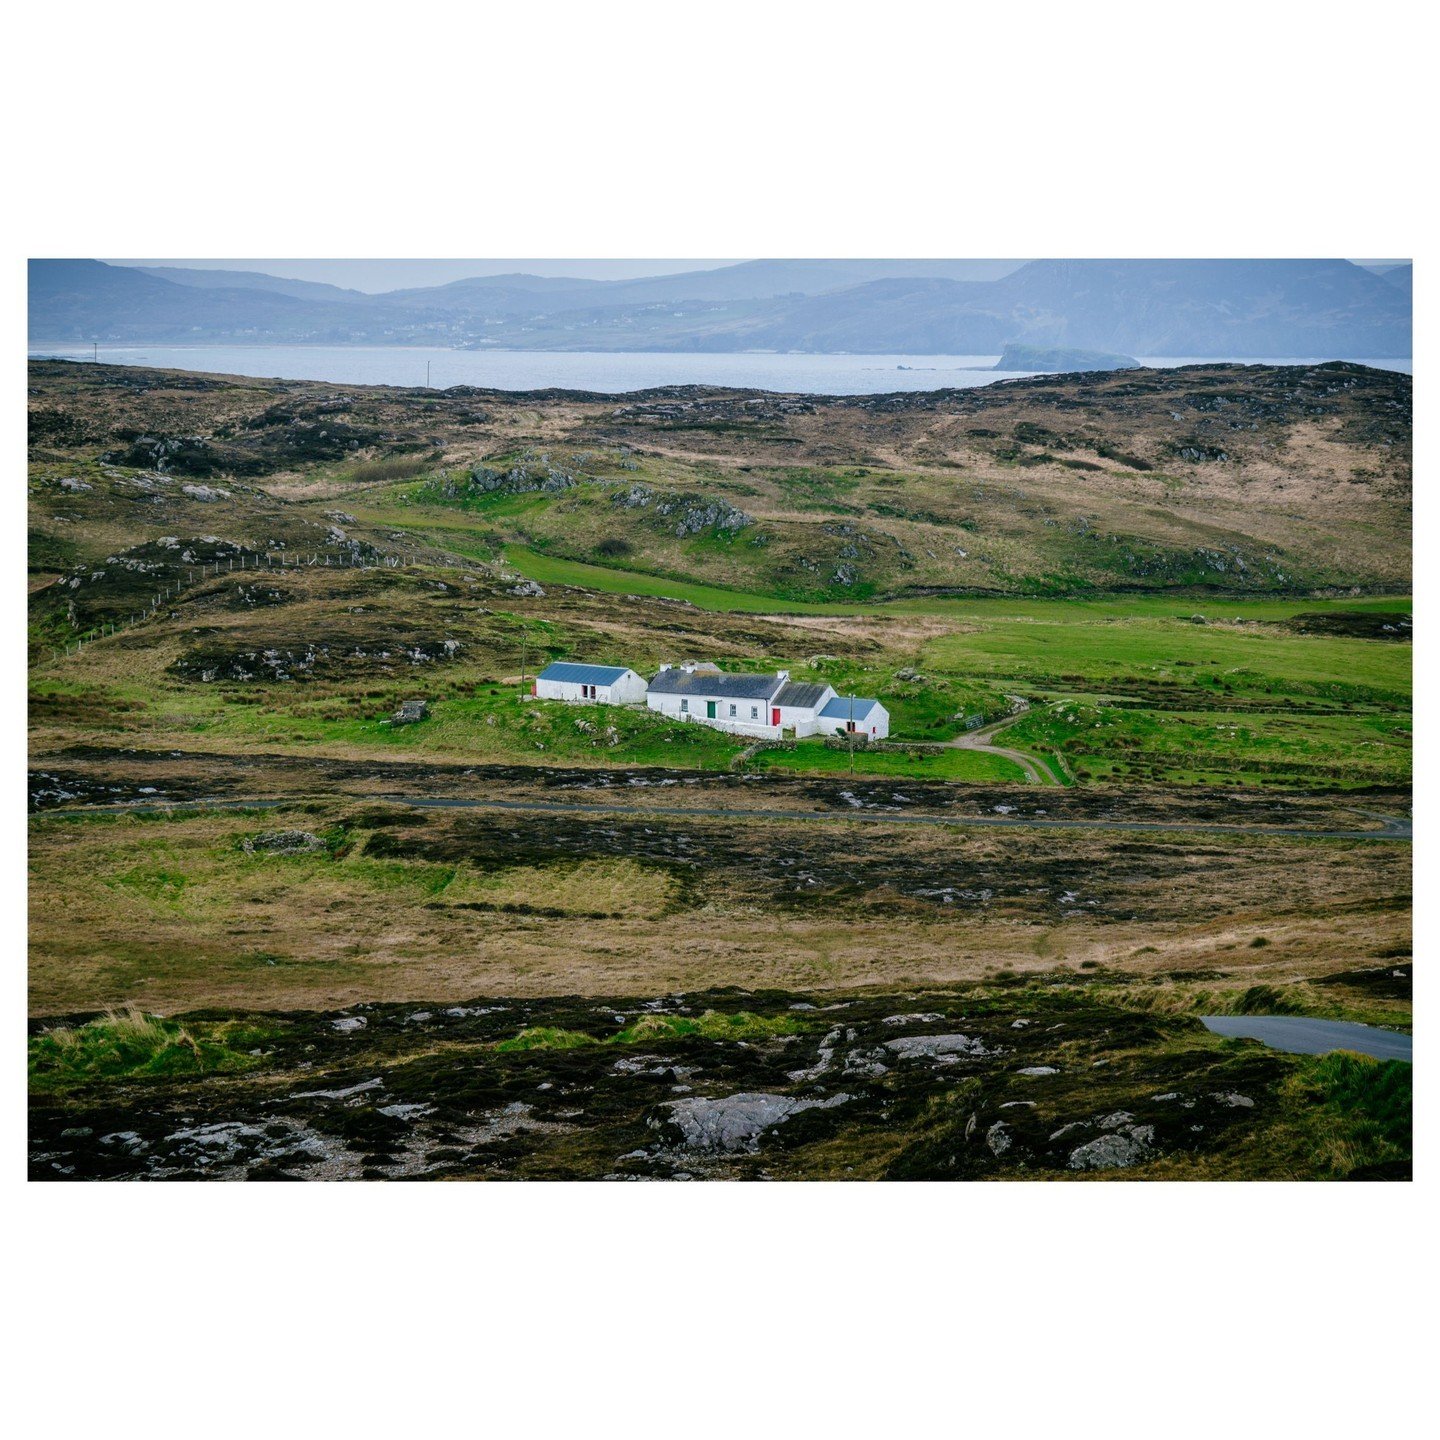 Cottages on Malin Head, Donegal!

#wildatlanticway #Ireland #donegal #loveireland #discoverireland